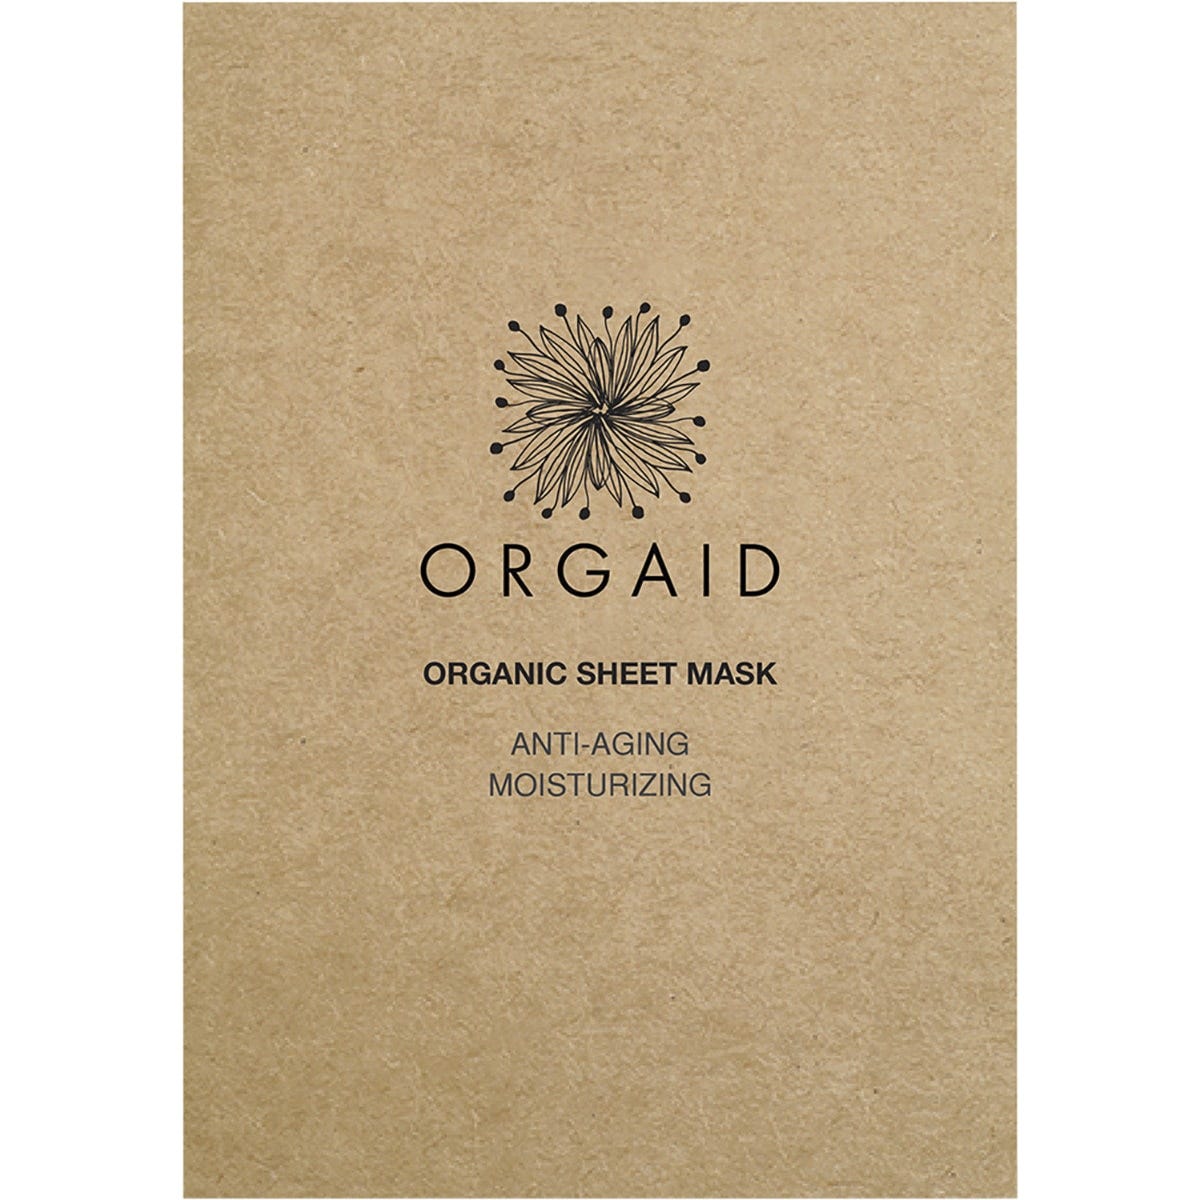 Orgaid Organic Sheet Mask Anti-Aging & Moisturizing 24ml - Dr Earth - Skincare